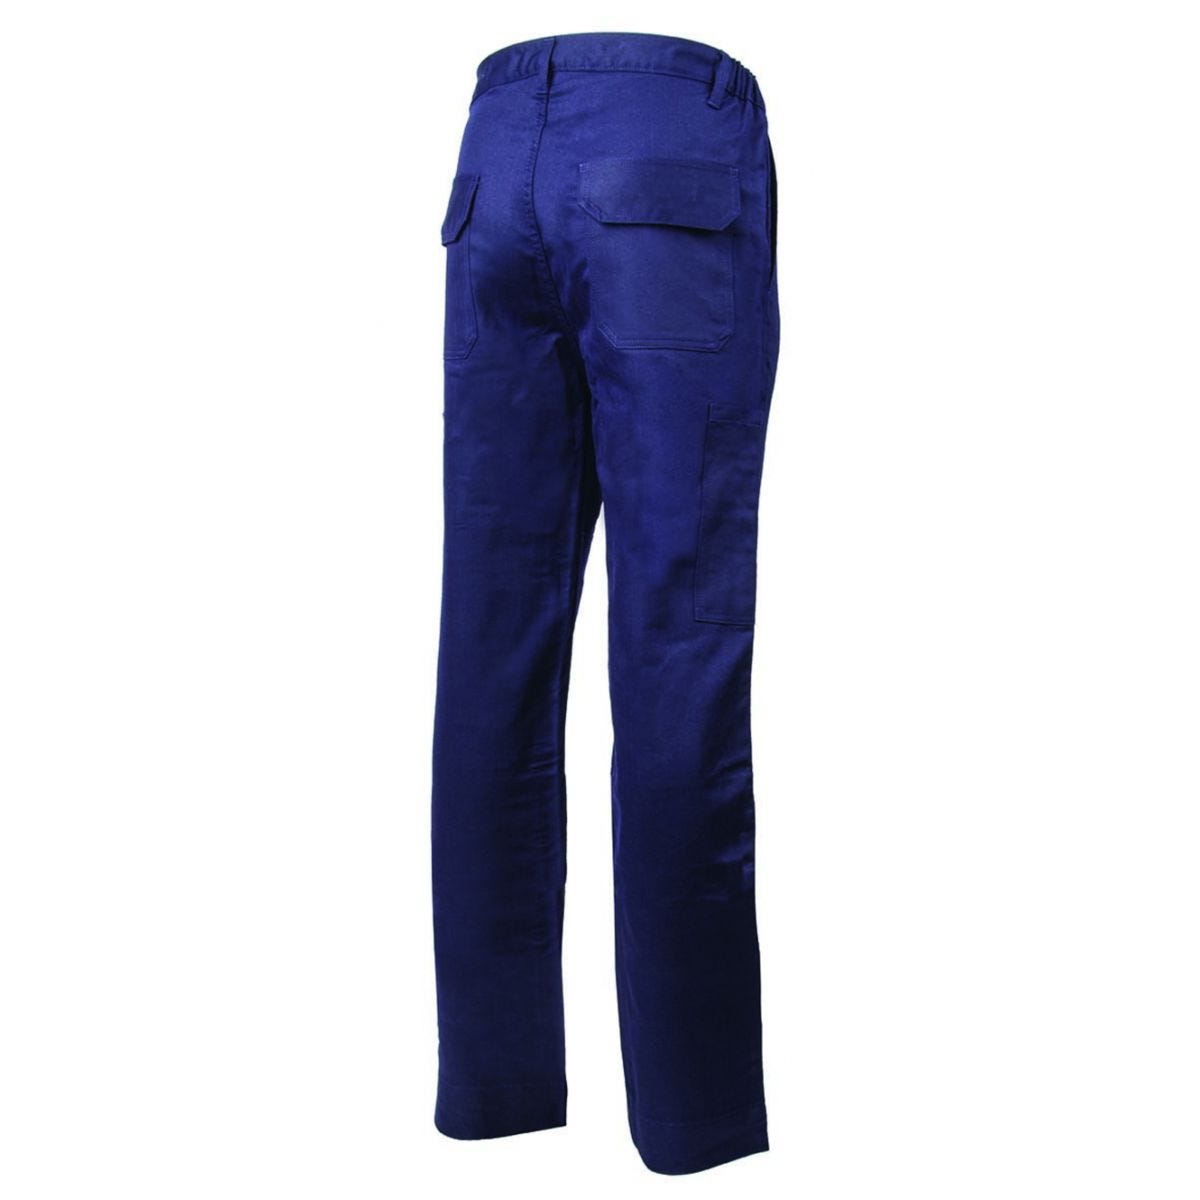 Pantalon STELLER multirisques - COVERGUARD - Taille 2XL 1